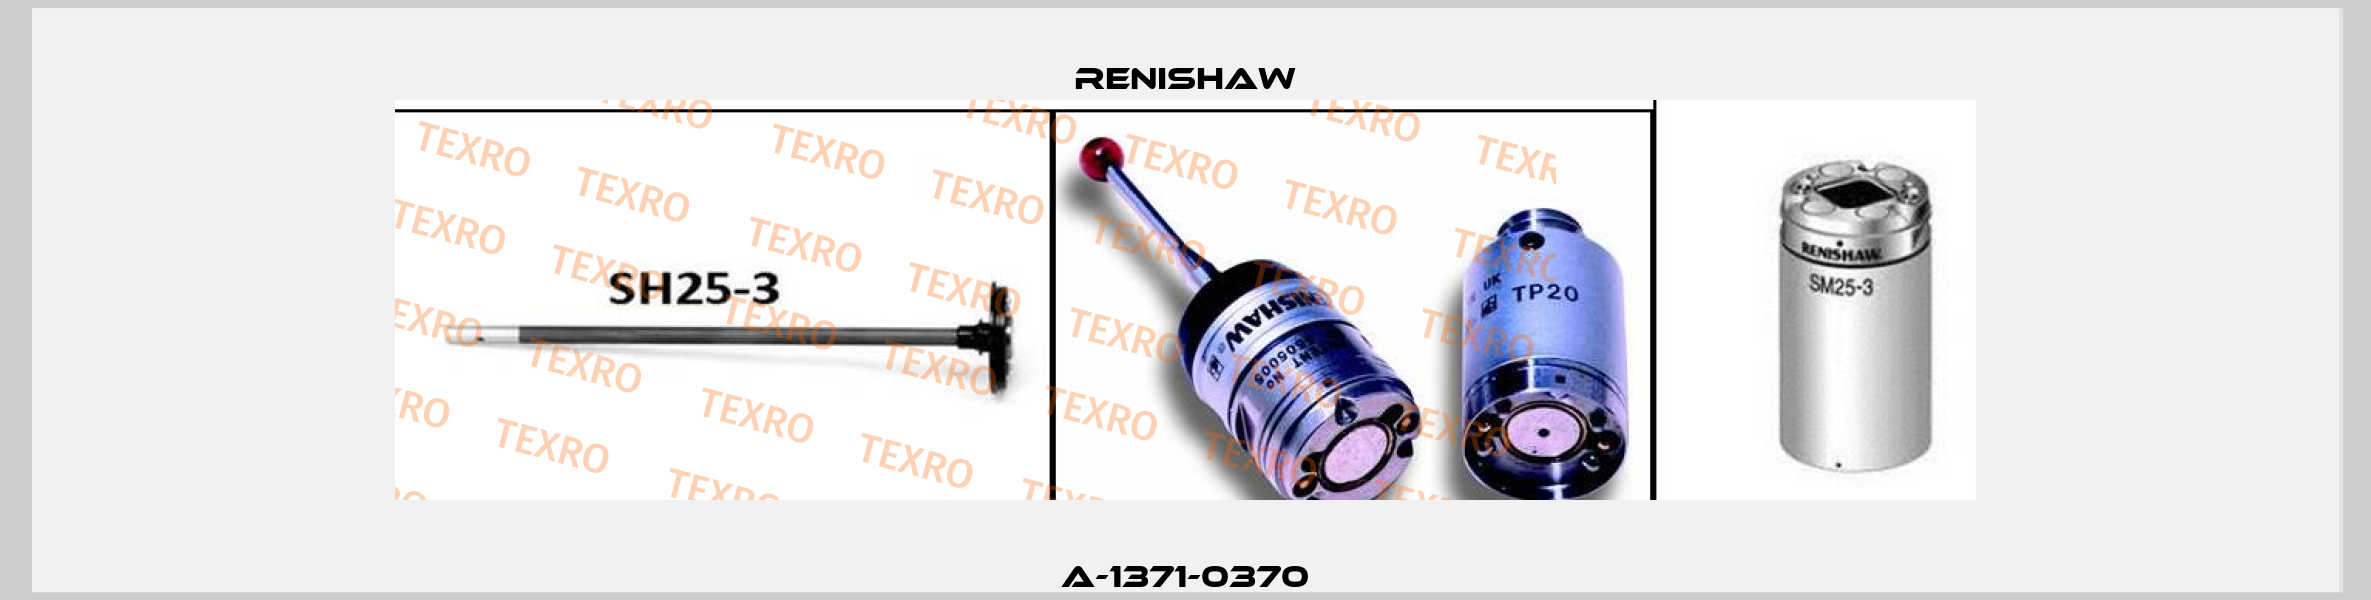 A-1371-0370 Renishaw